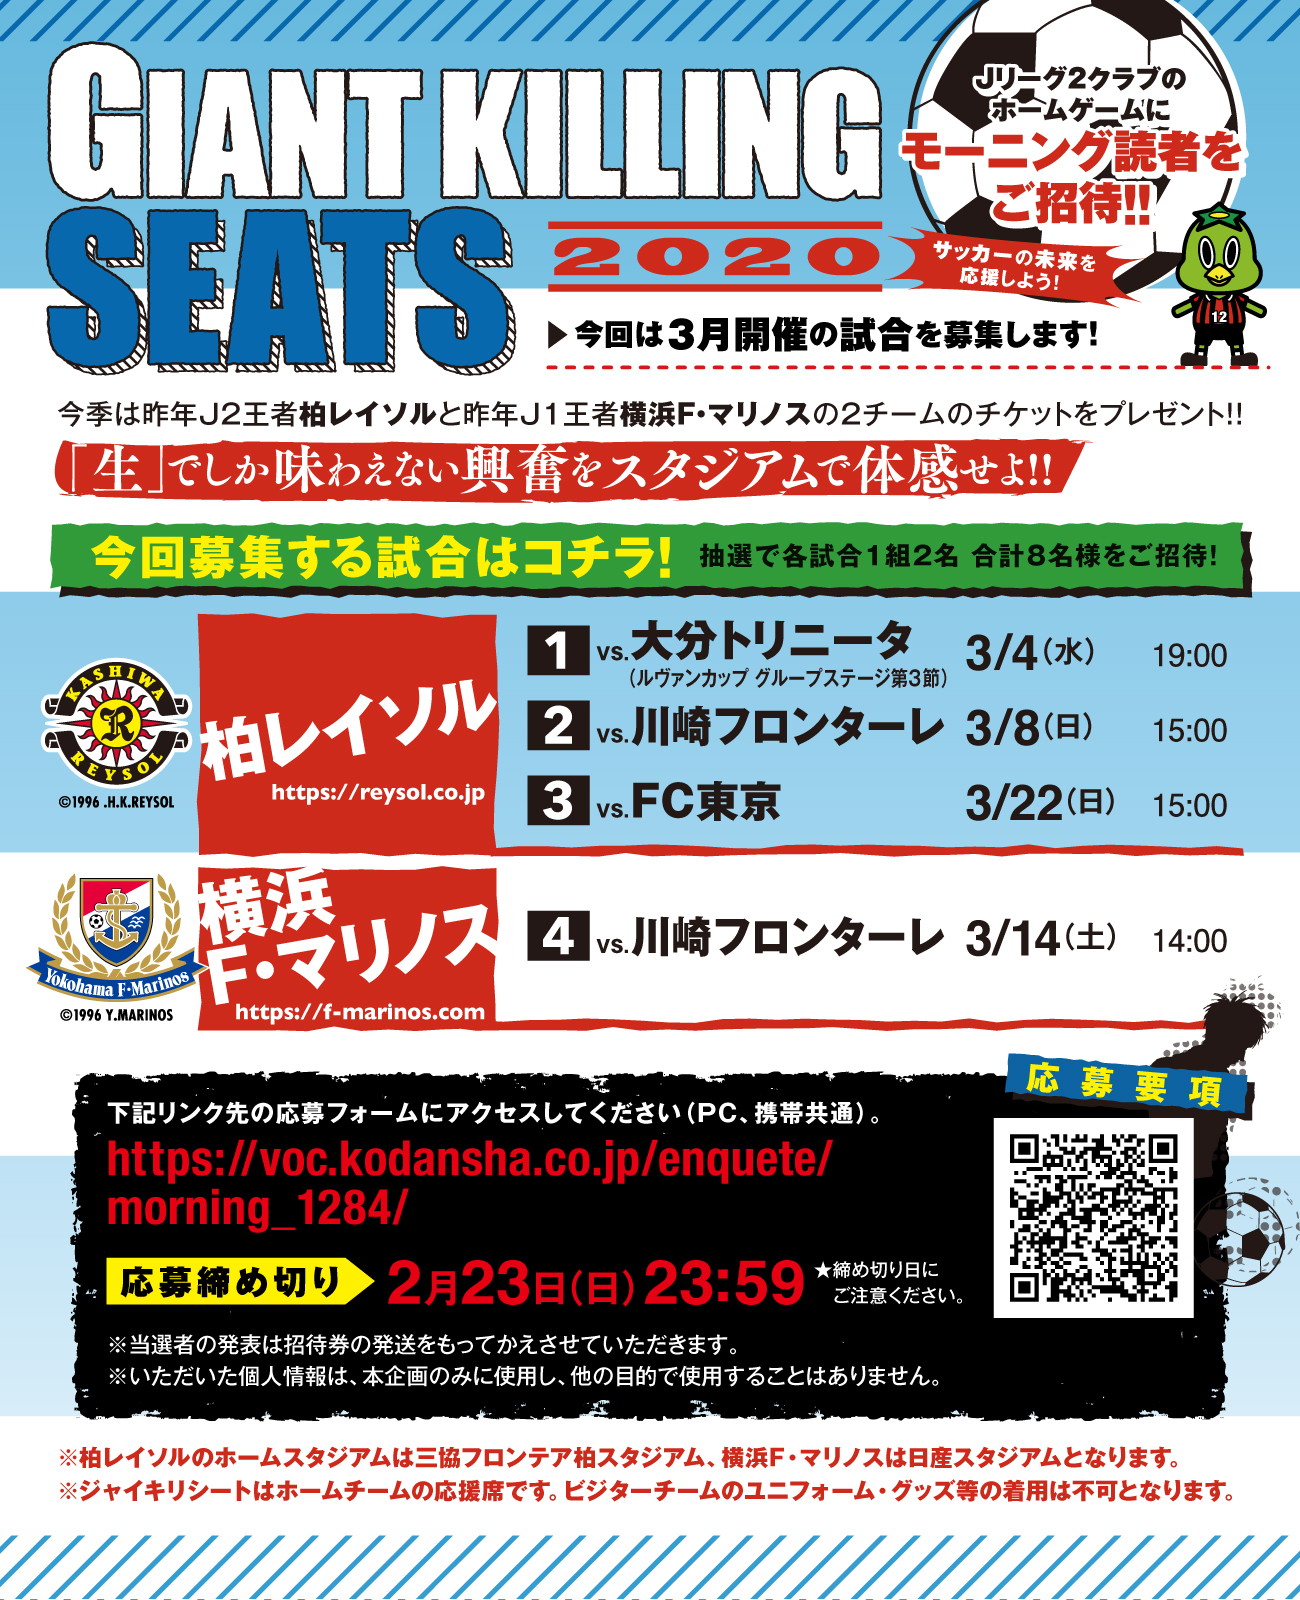 Giant Killingシート J1リーグ所属クラブのホームゲームに読者をご招待する ジャイキリシート シーズンは柏と横浜fm 3月開催4試合の募集がスタート モーニング公式サイト 講談社の青年漫画誌